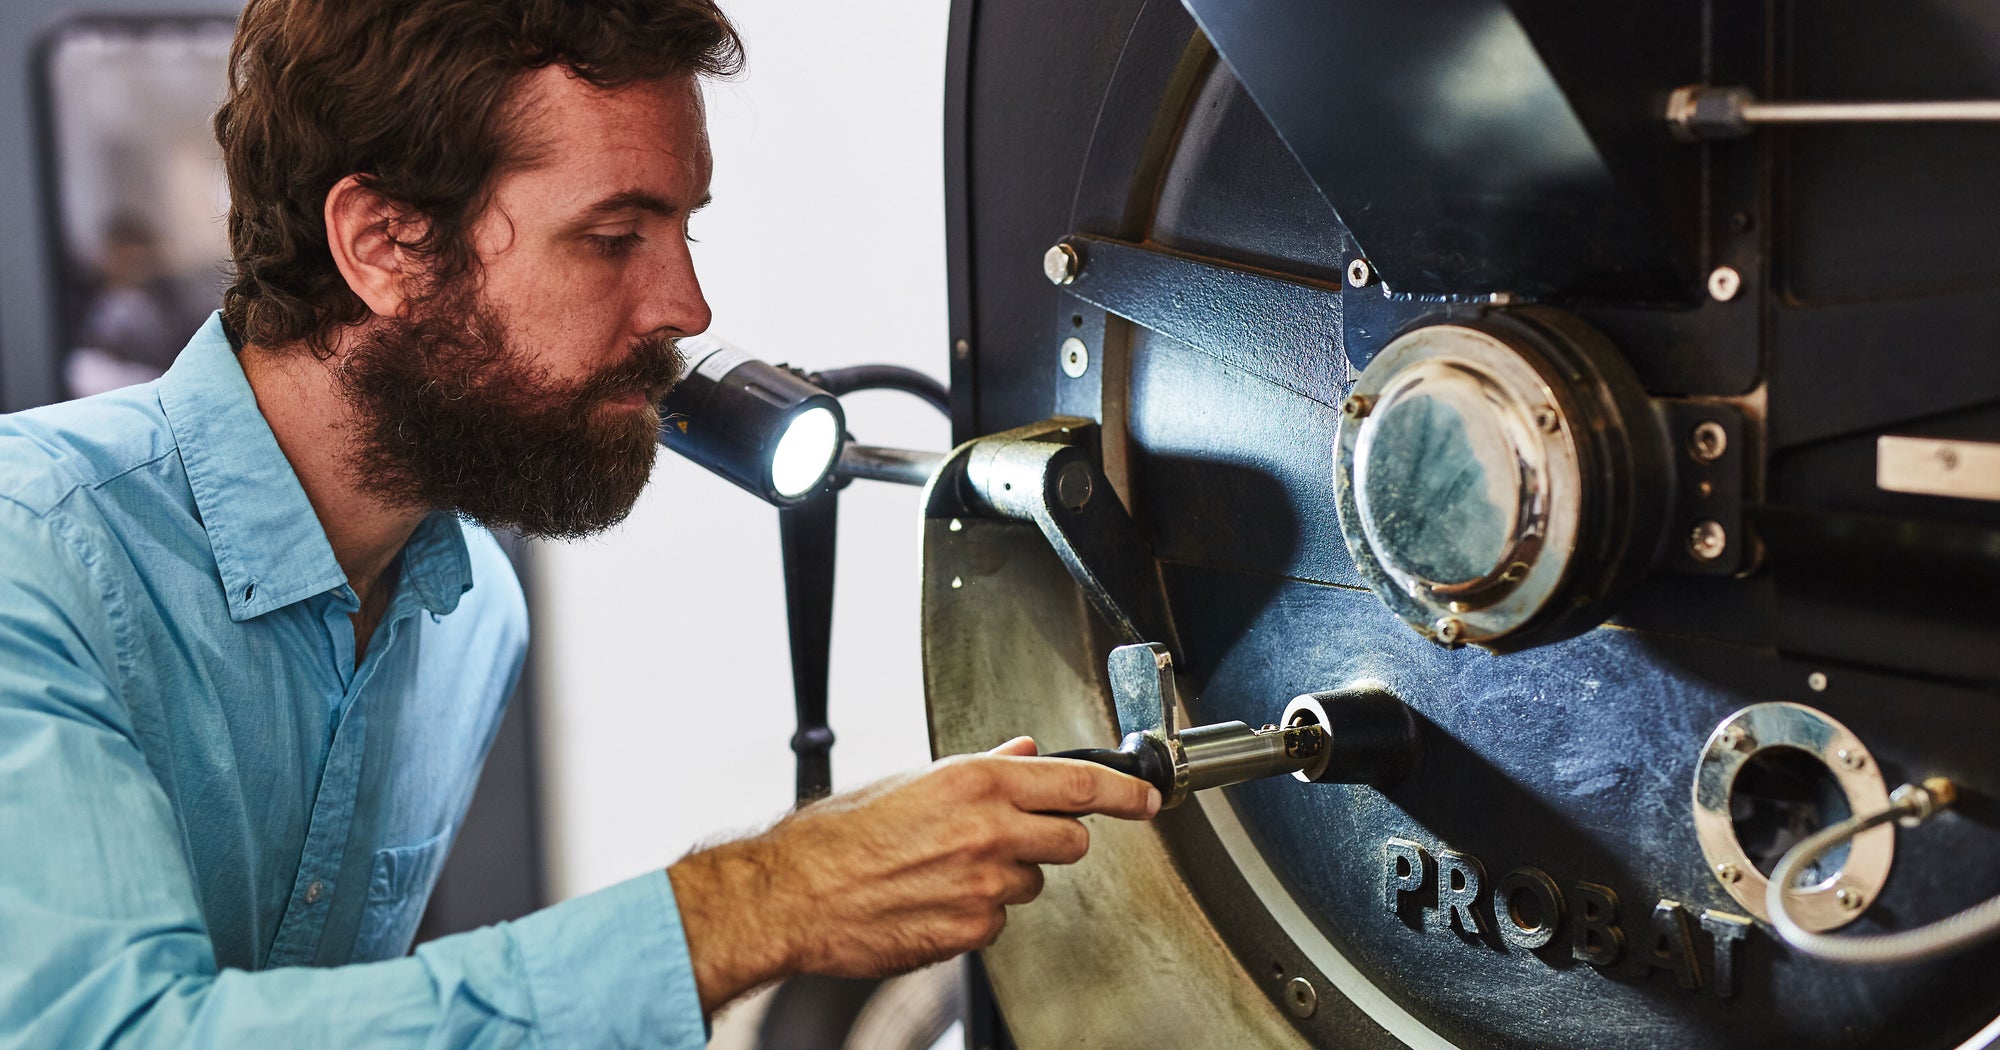 a bearded man roasting coffee on a probat coffee roaster